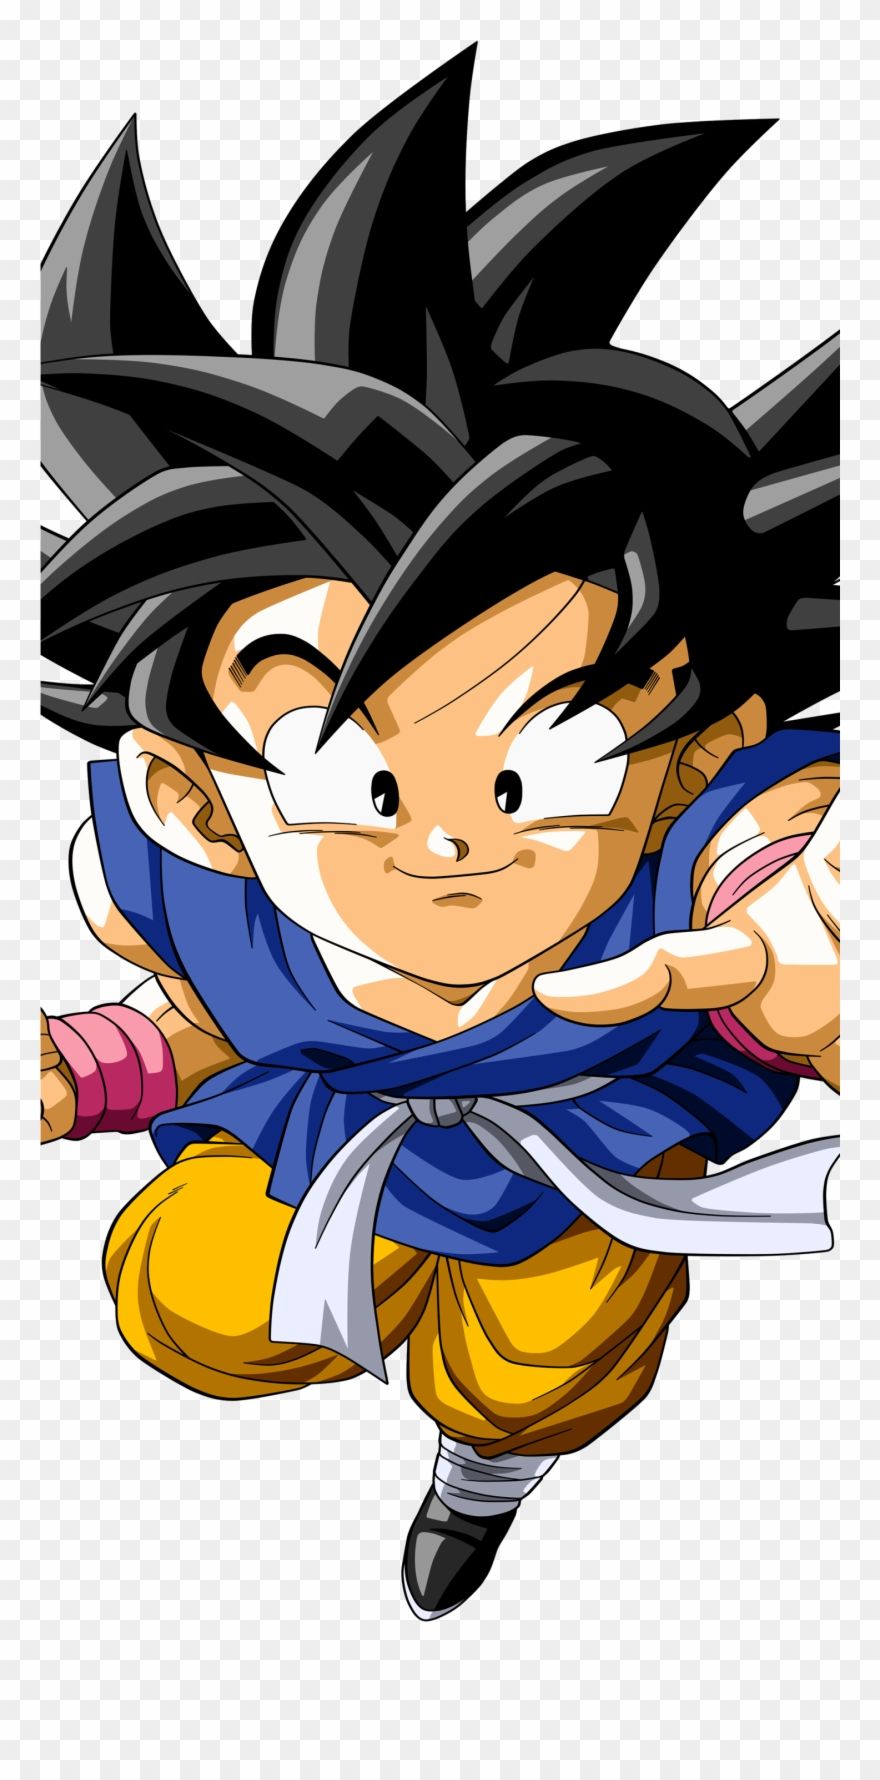 Goku jr wallpaper Goku new form kamehameha speed draw free wallpaper youtube